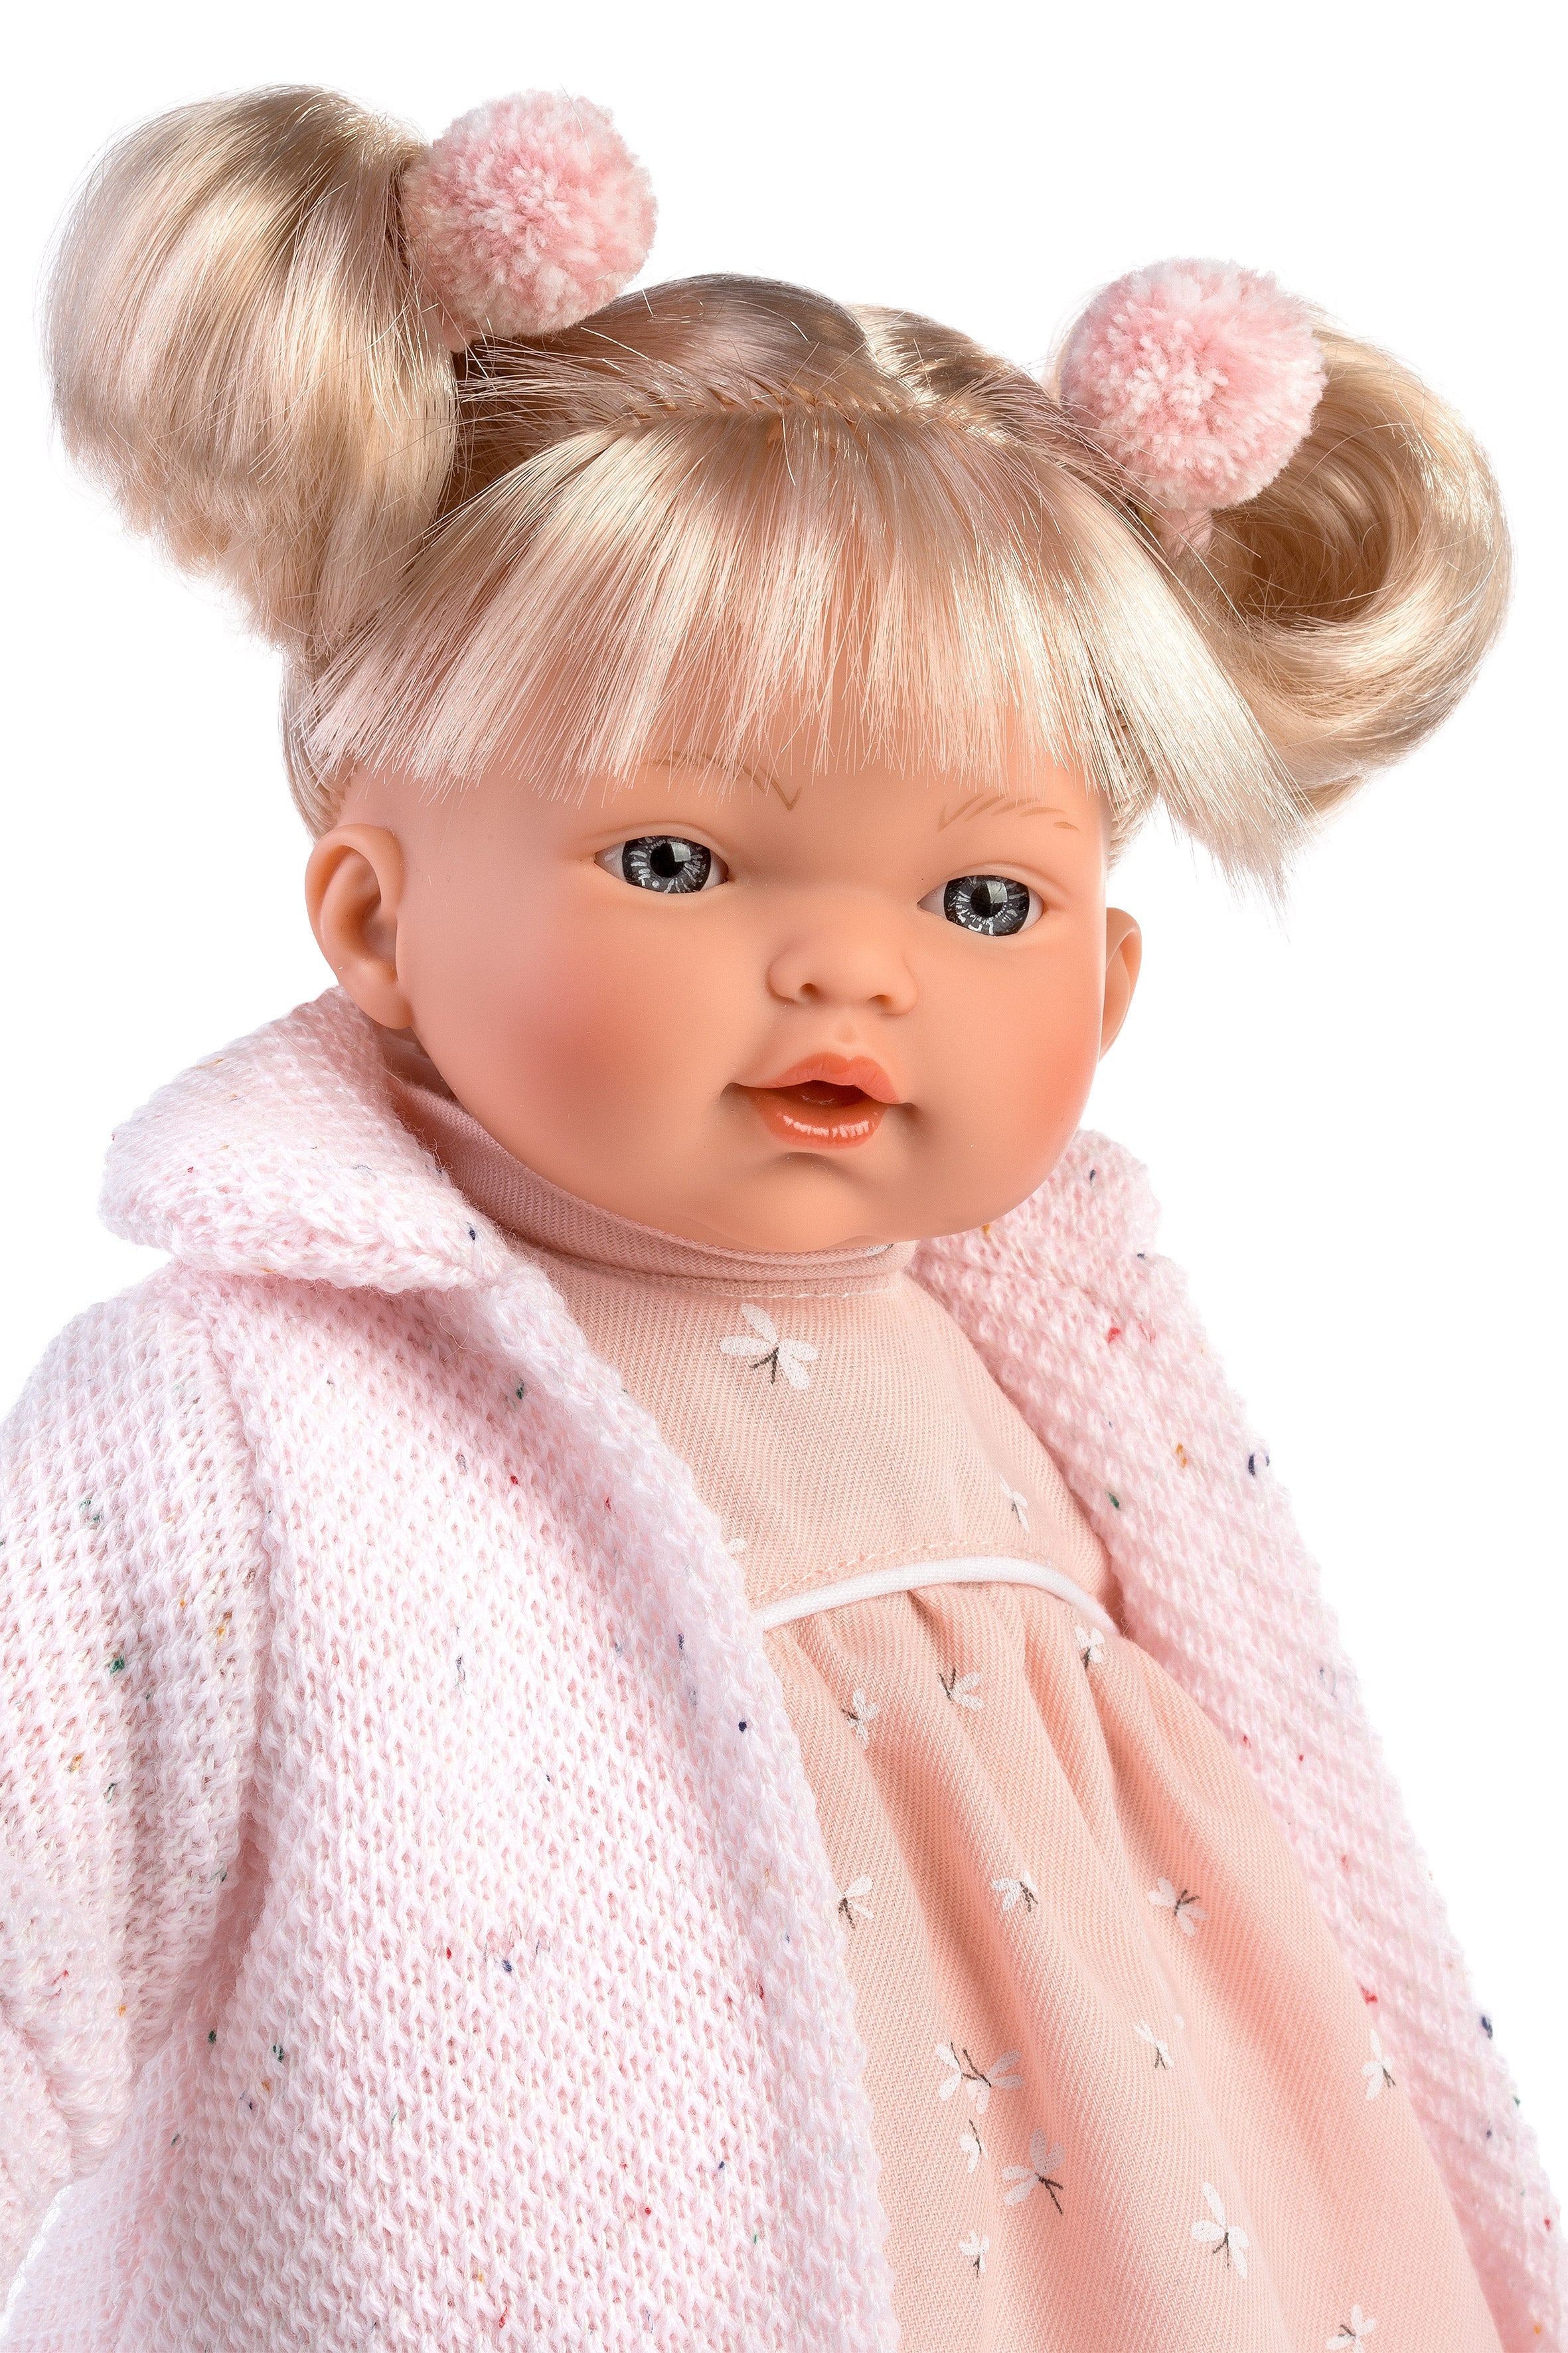 Llorens 13" Soft Body Crying Baby Doll Taylor Dolls